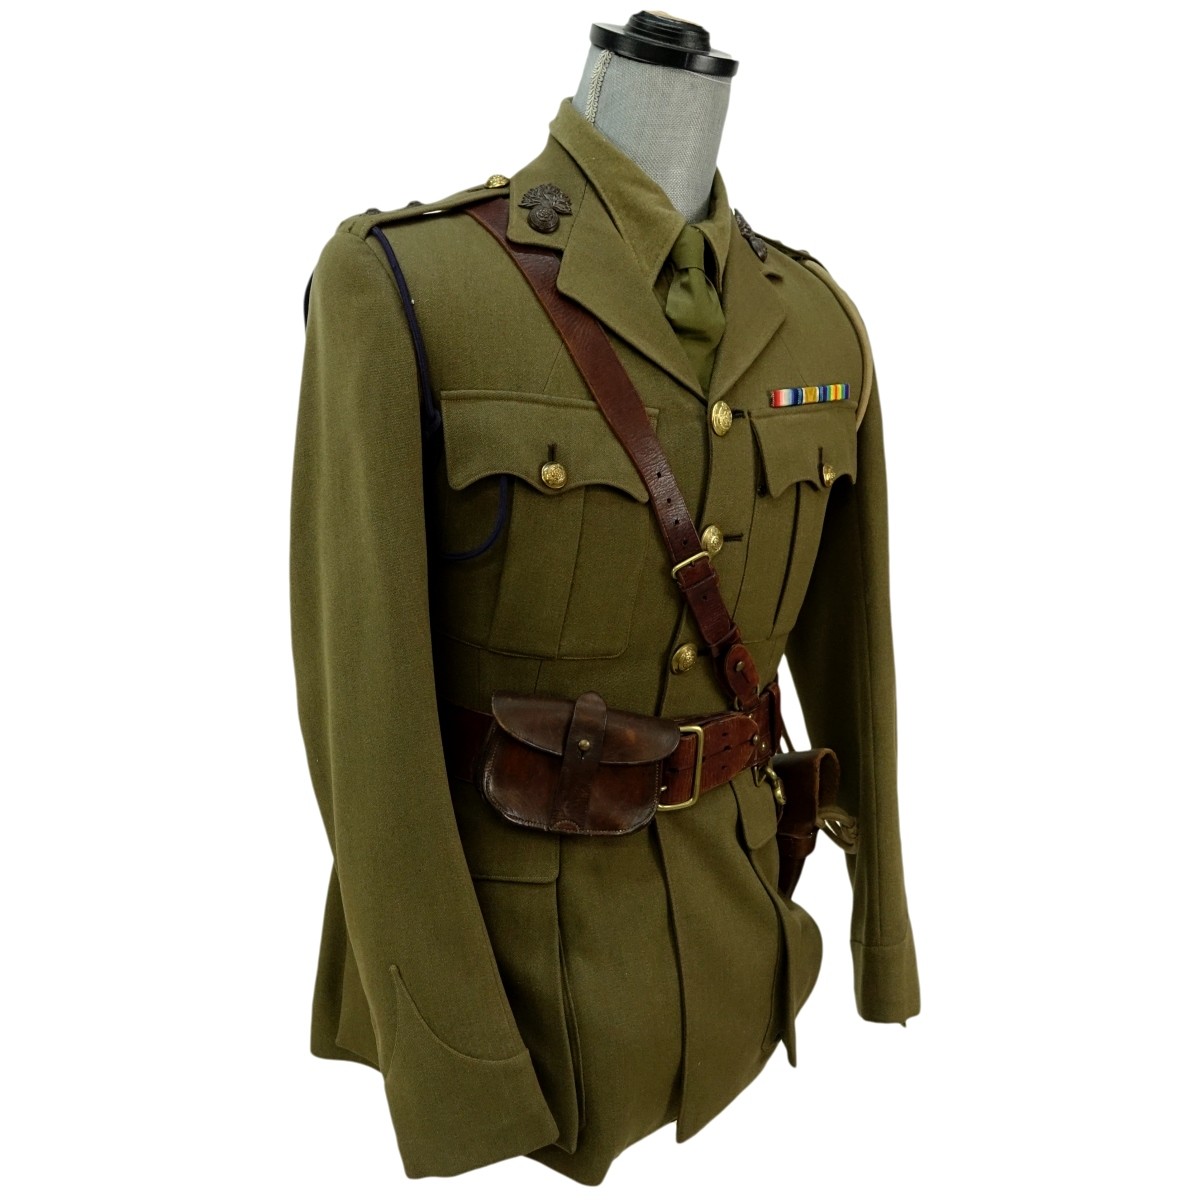 Vintage World War II Era Military Uniform